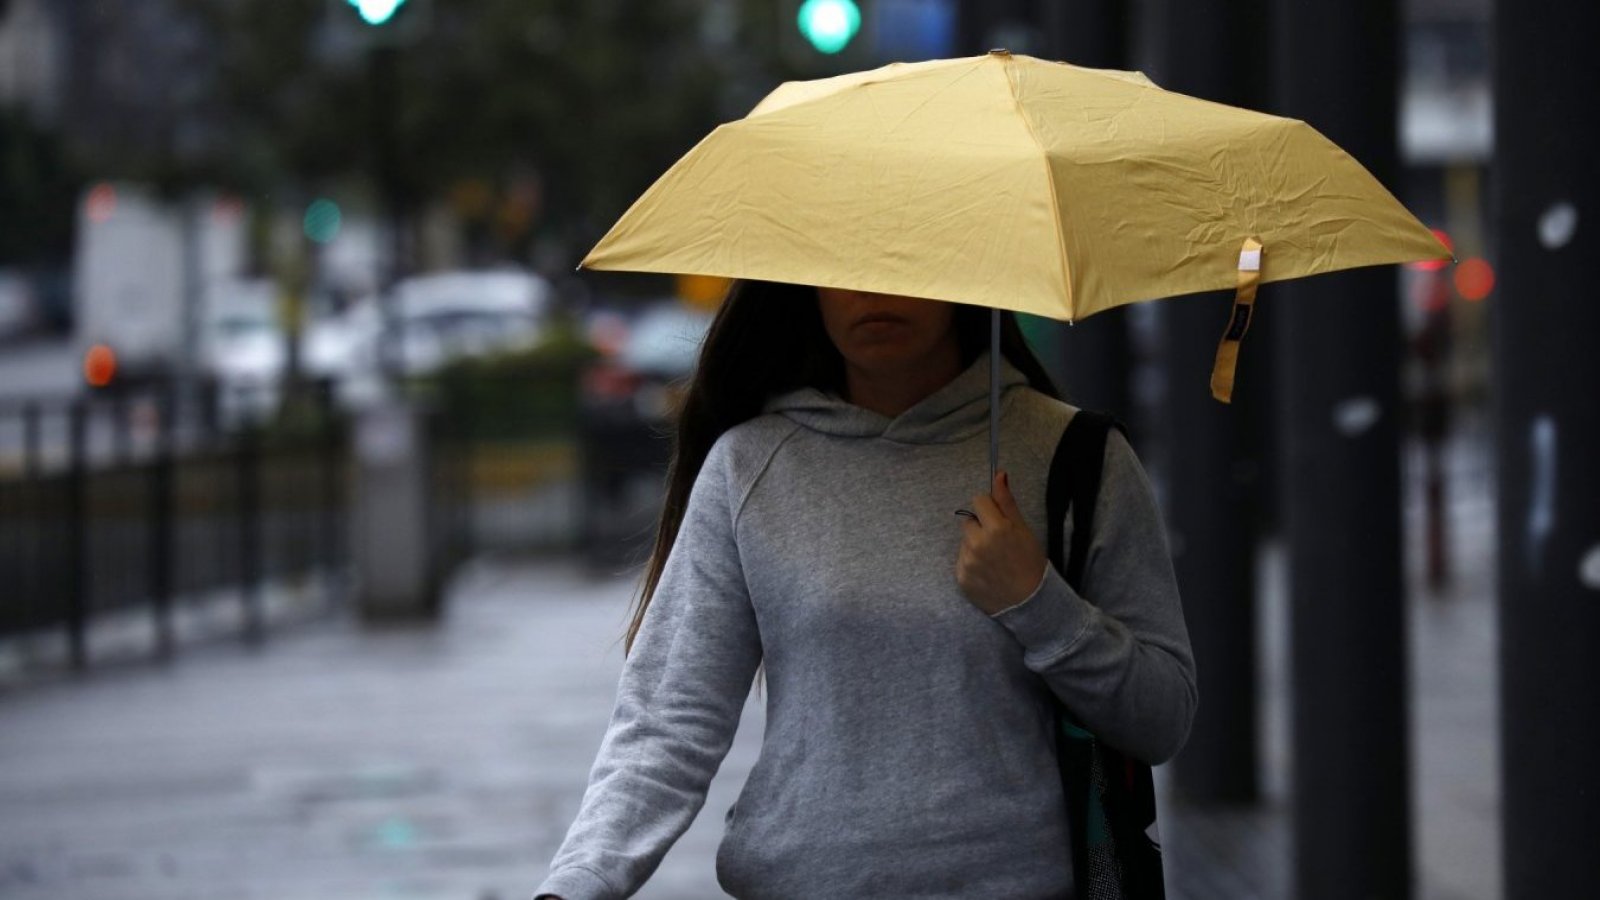 Mujer con paragua amarillo caminando bajo la lluvia.